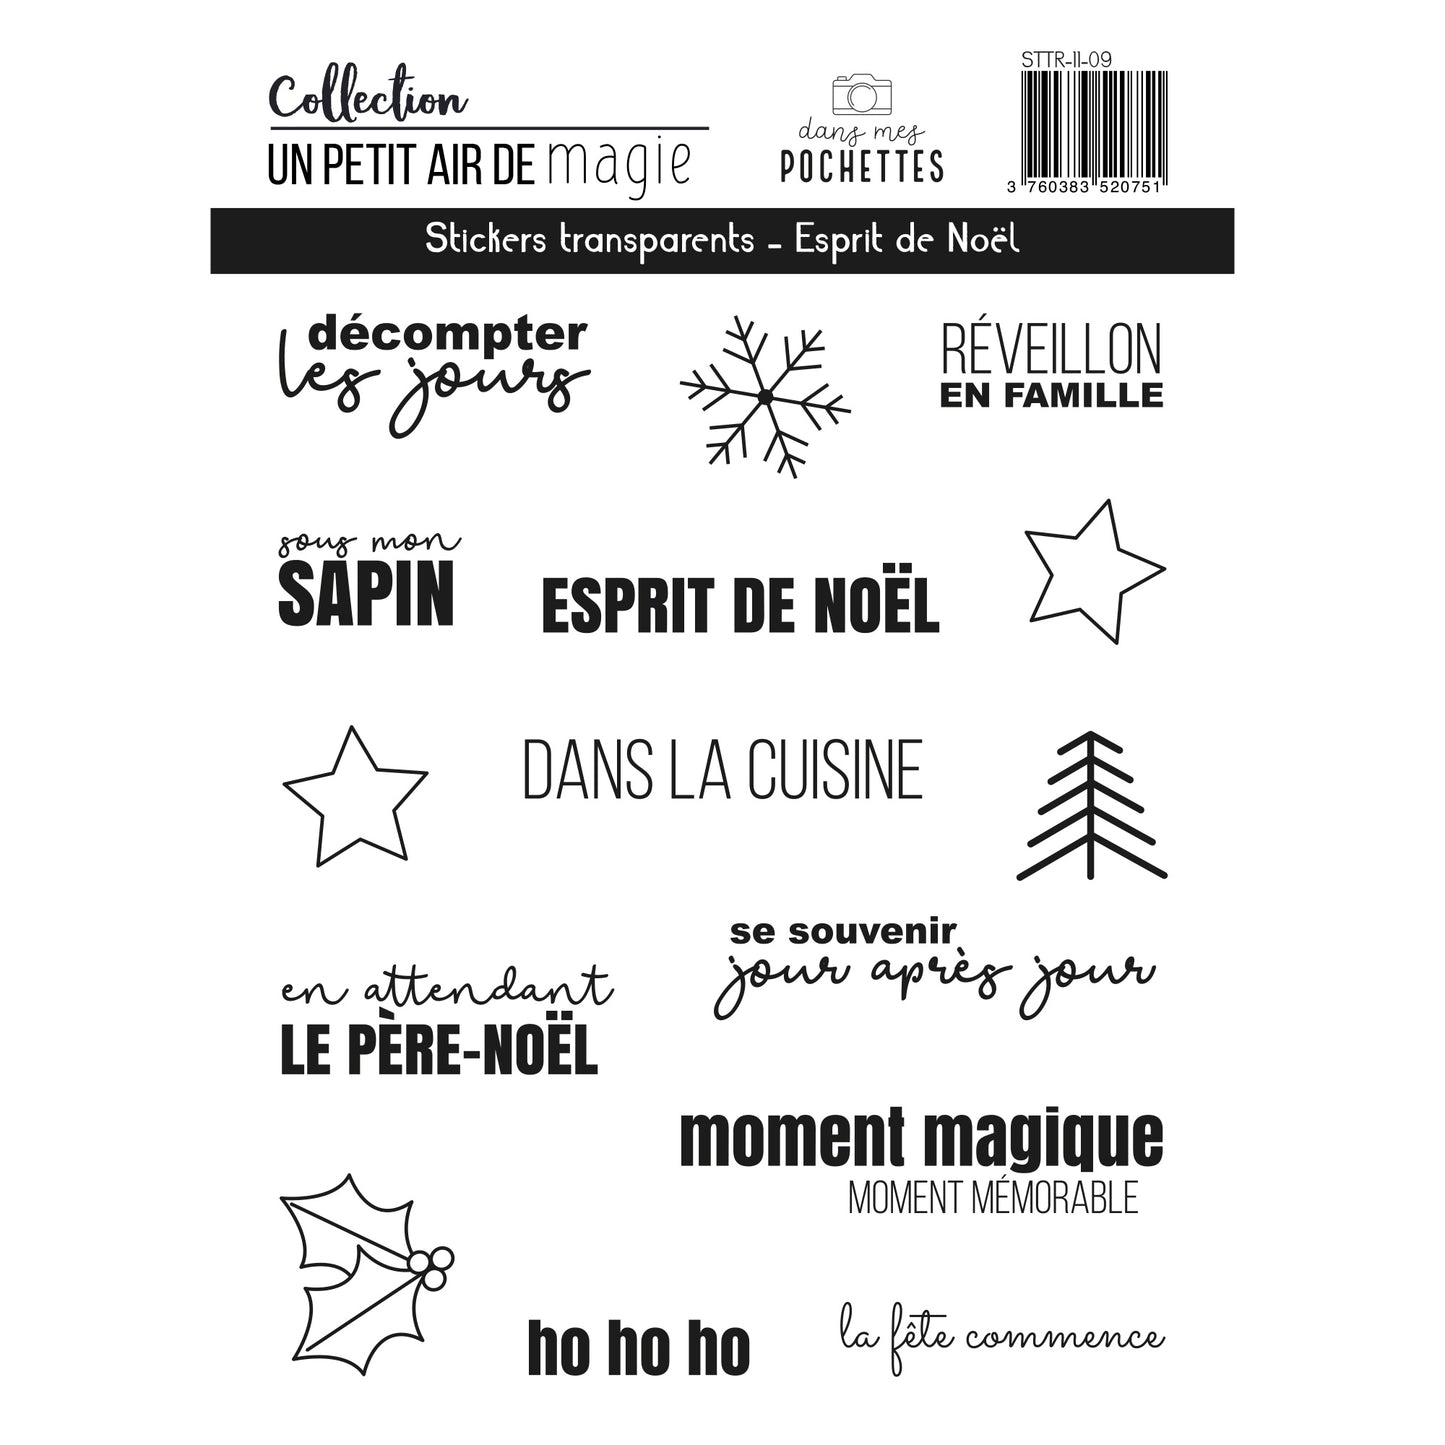 Stickers transparents - Esprit de Noël - Un petit air de magie